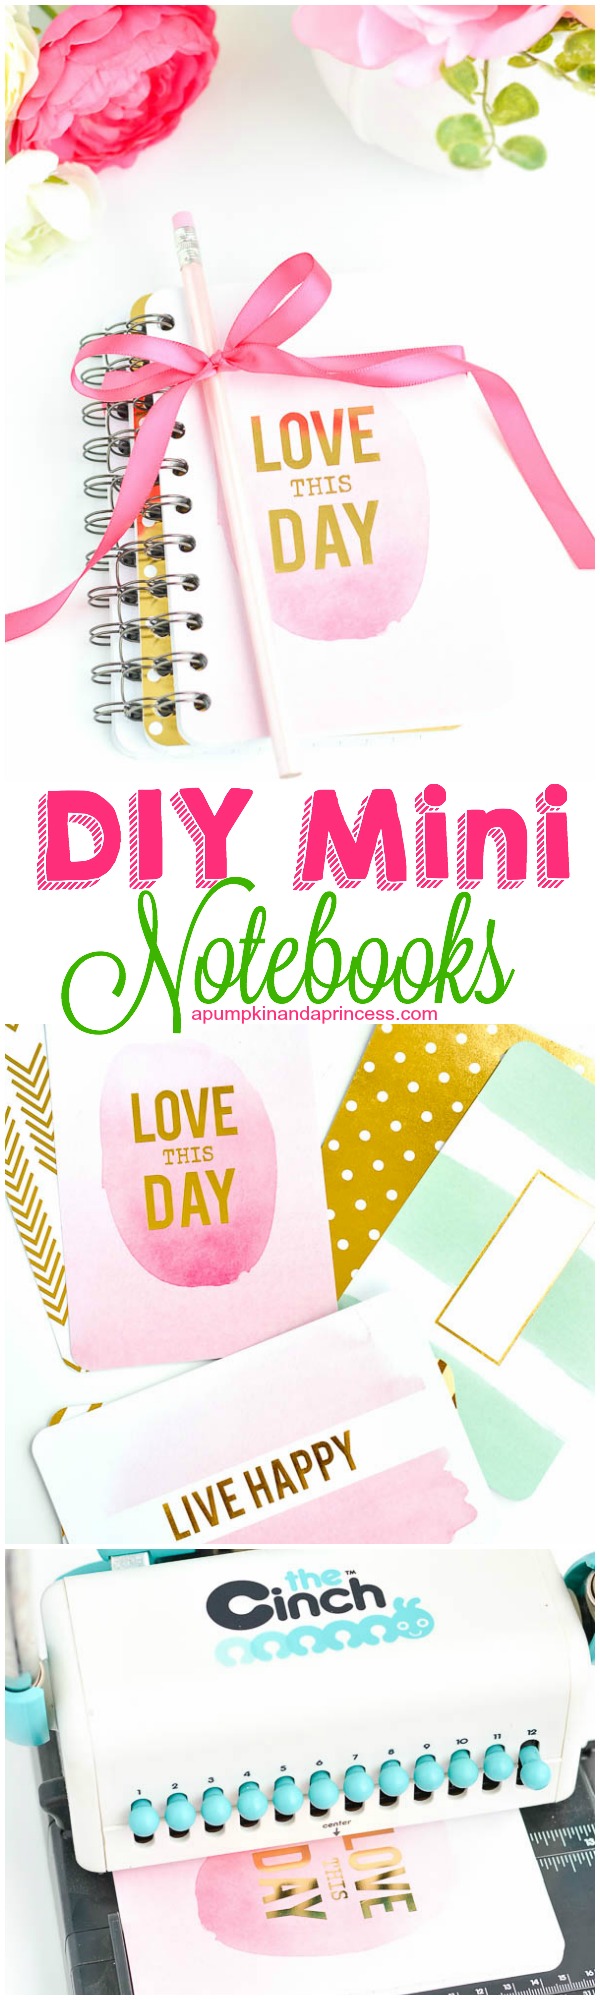 DIY-Mini-Notebooks2